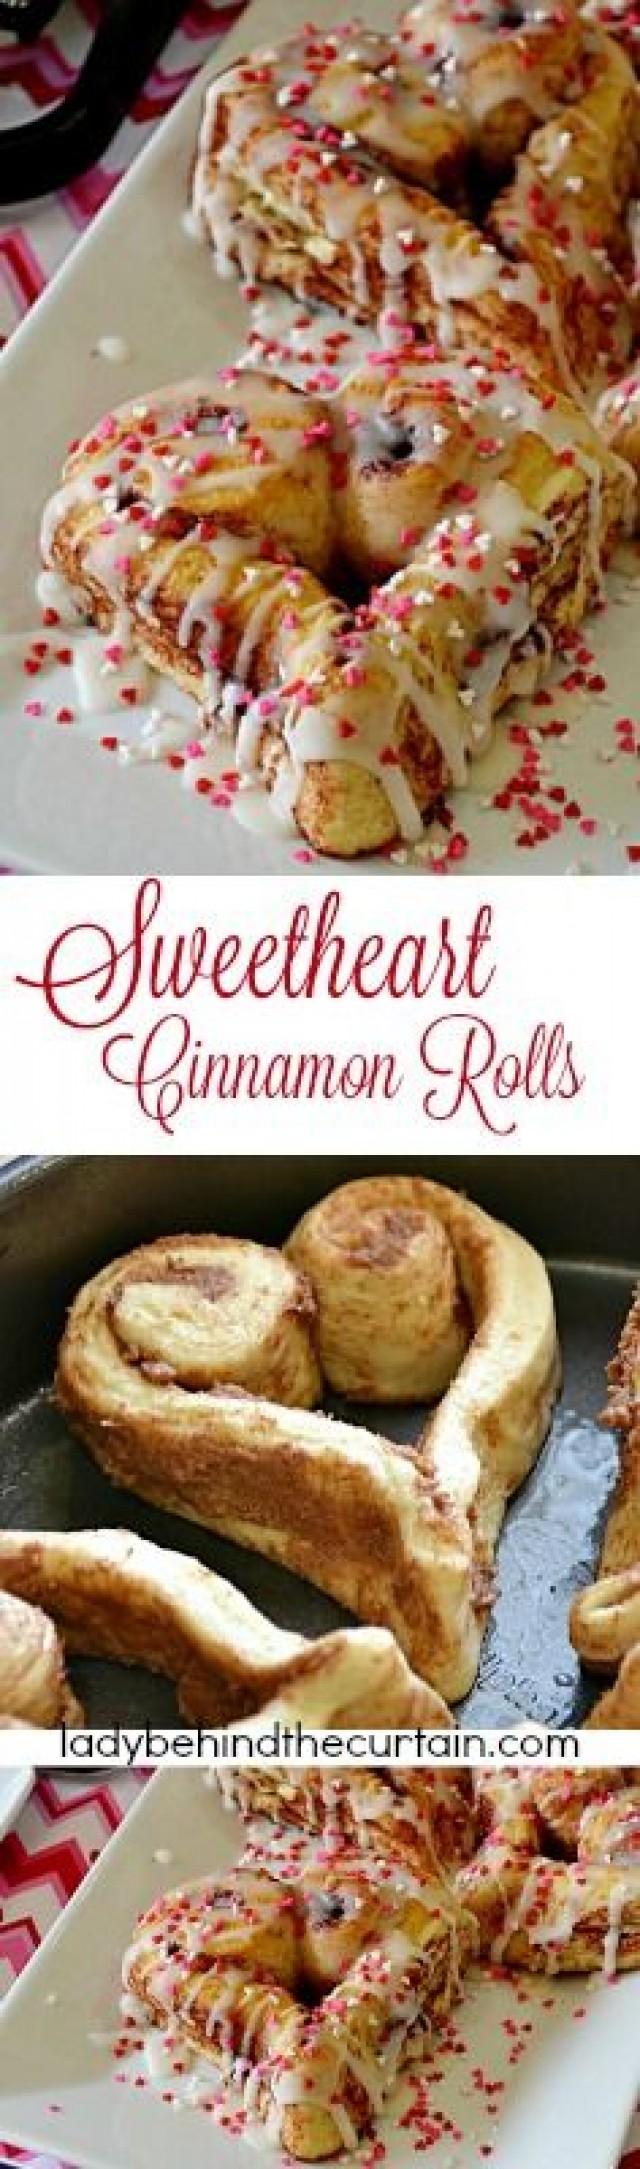 Sweetheart Cinnamon Rolls